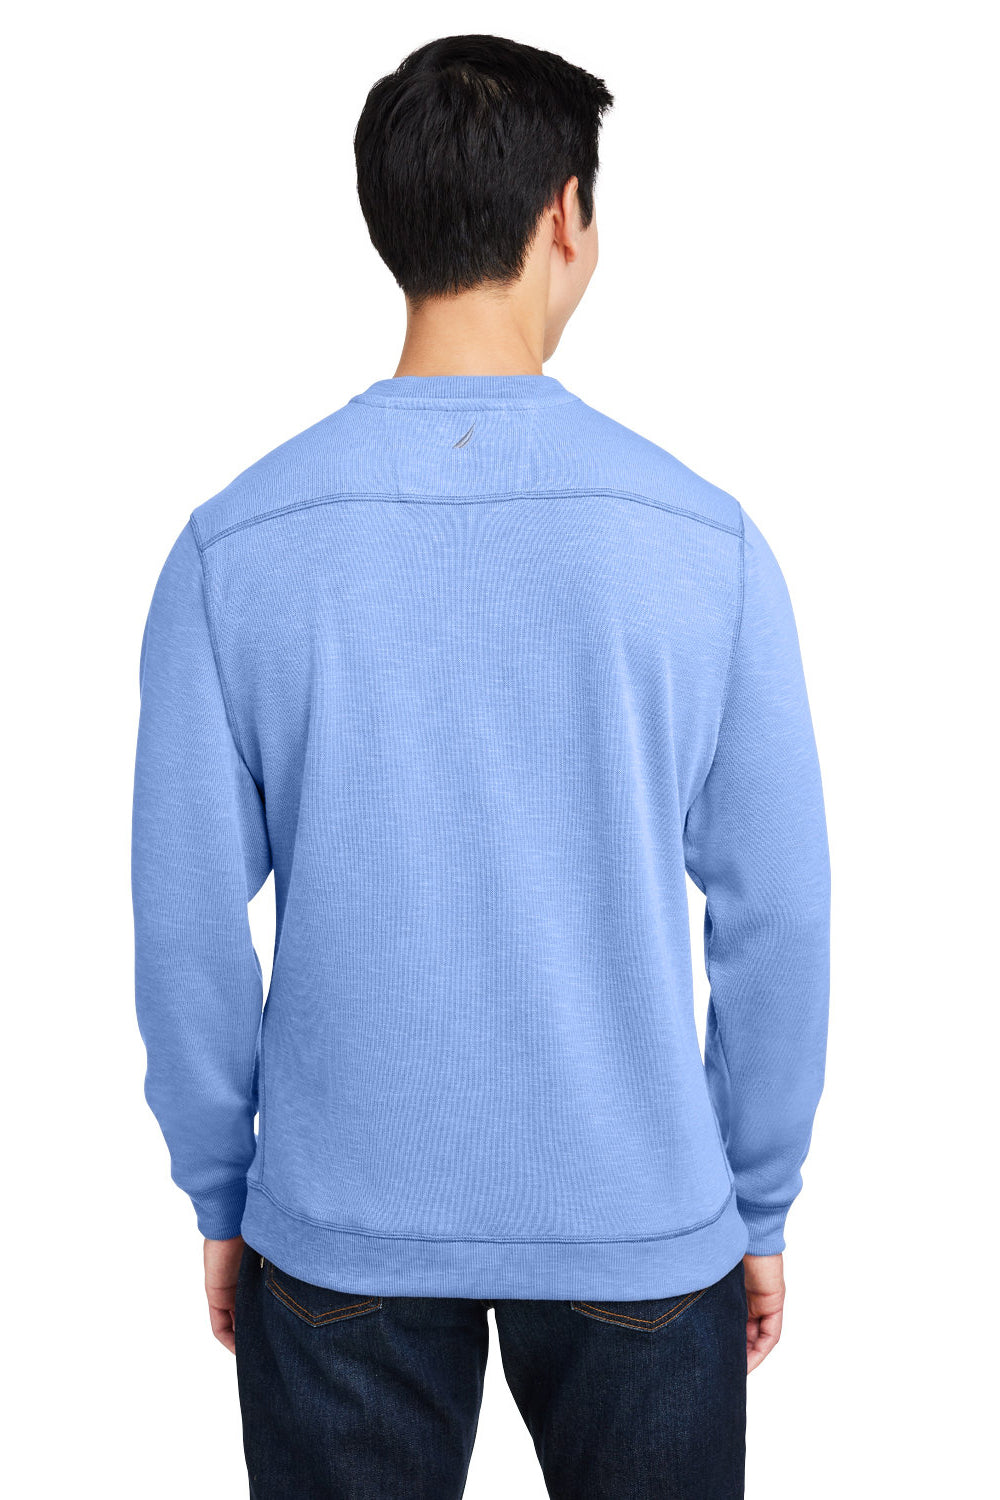 Nautica N17989 Mens Sun Surfer Supreme Crewneck Sweatshirt Vintage Mavi Blue Back